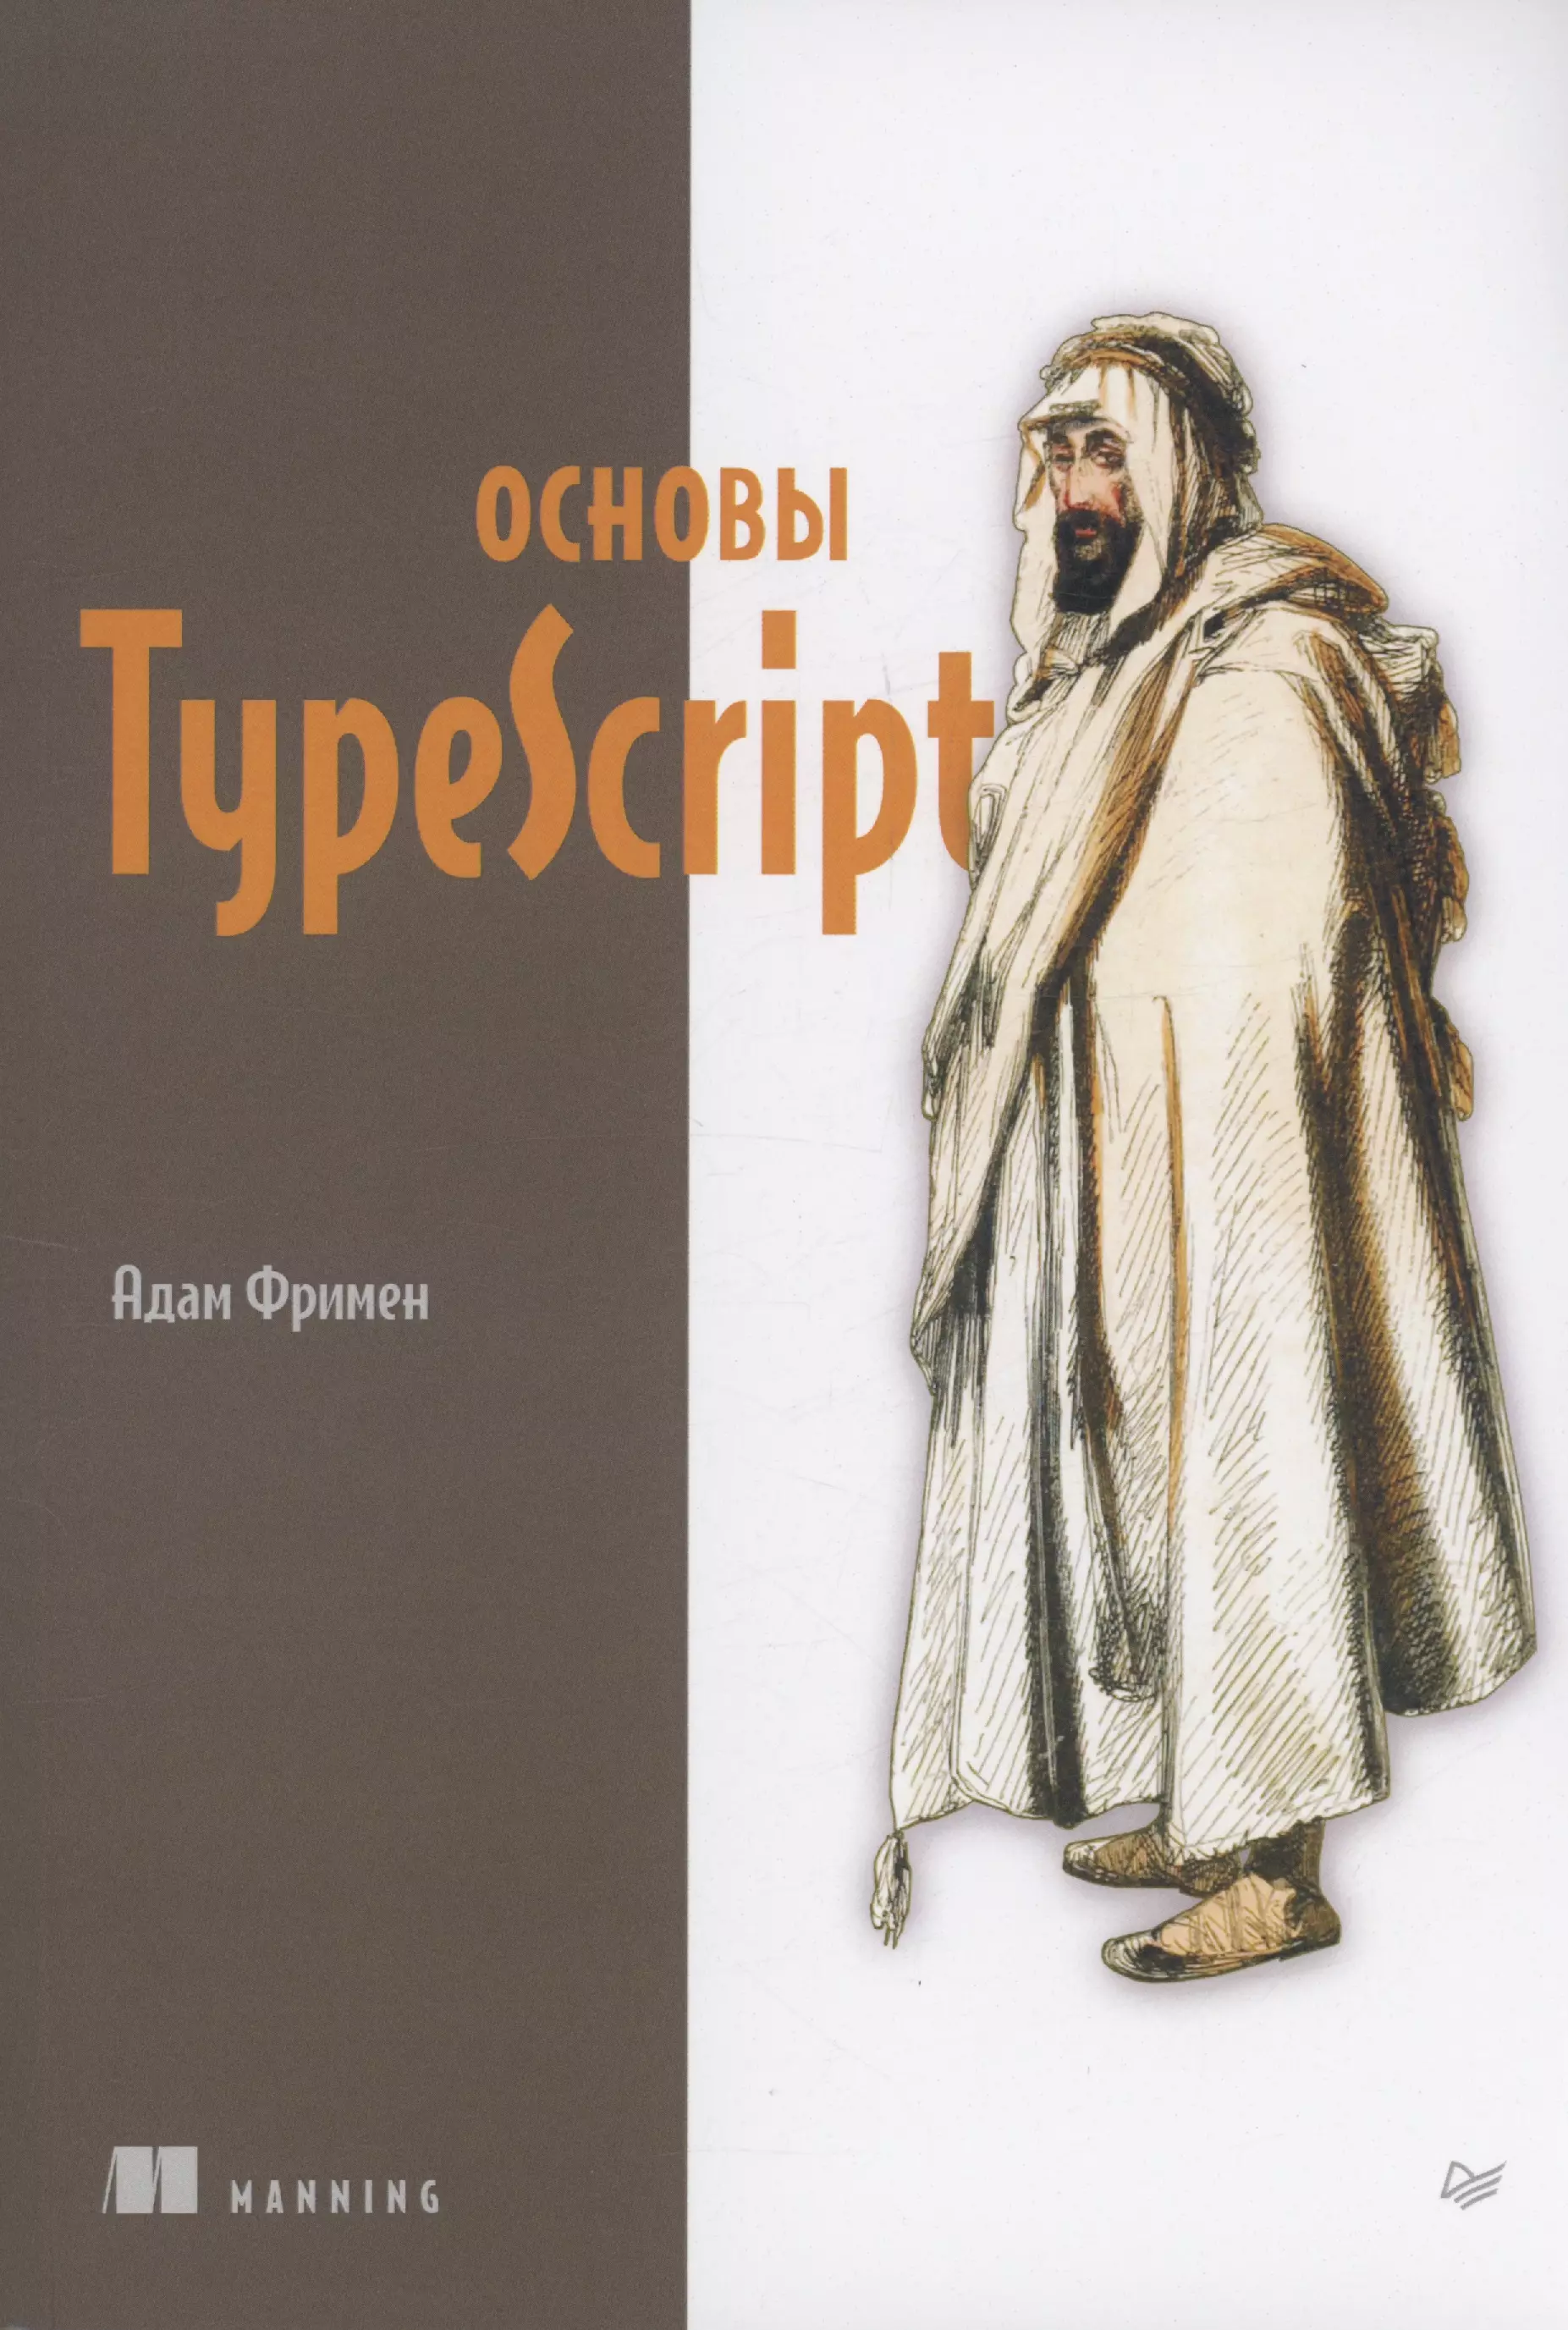 Фримен Адам Основы TypeScript файн я моисеев а typescript быстро